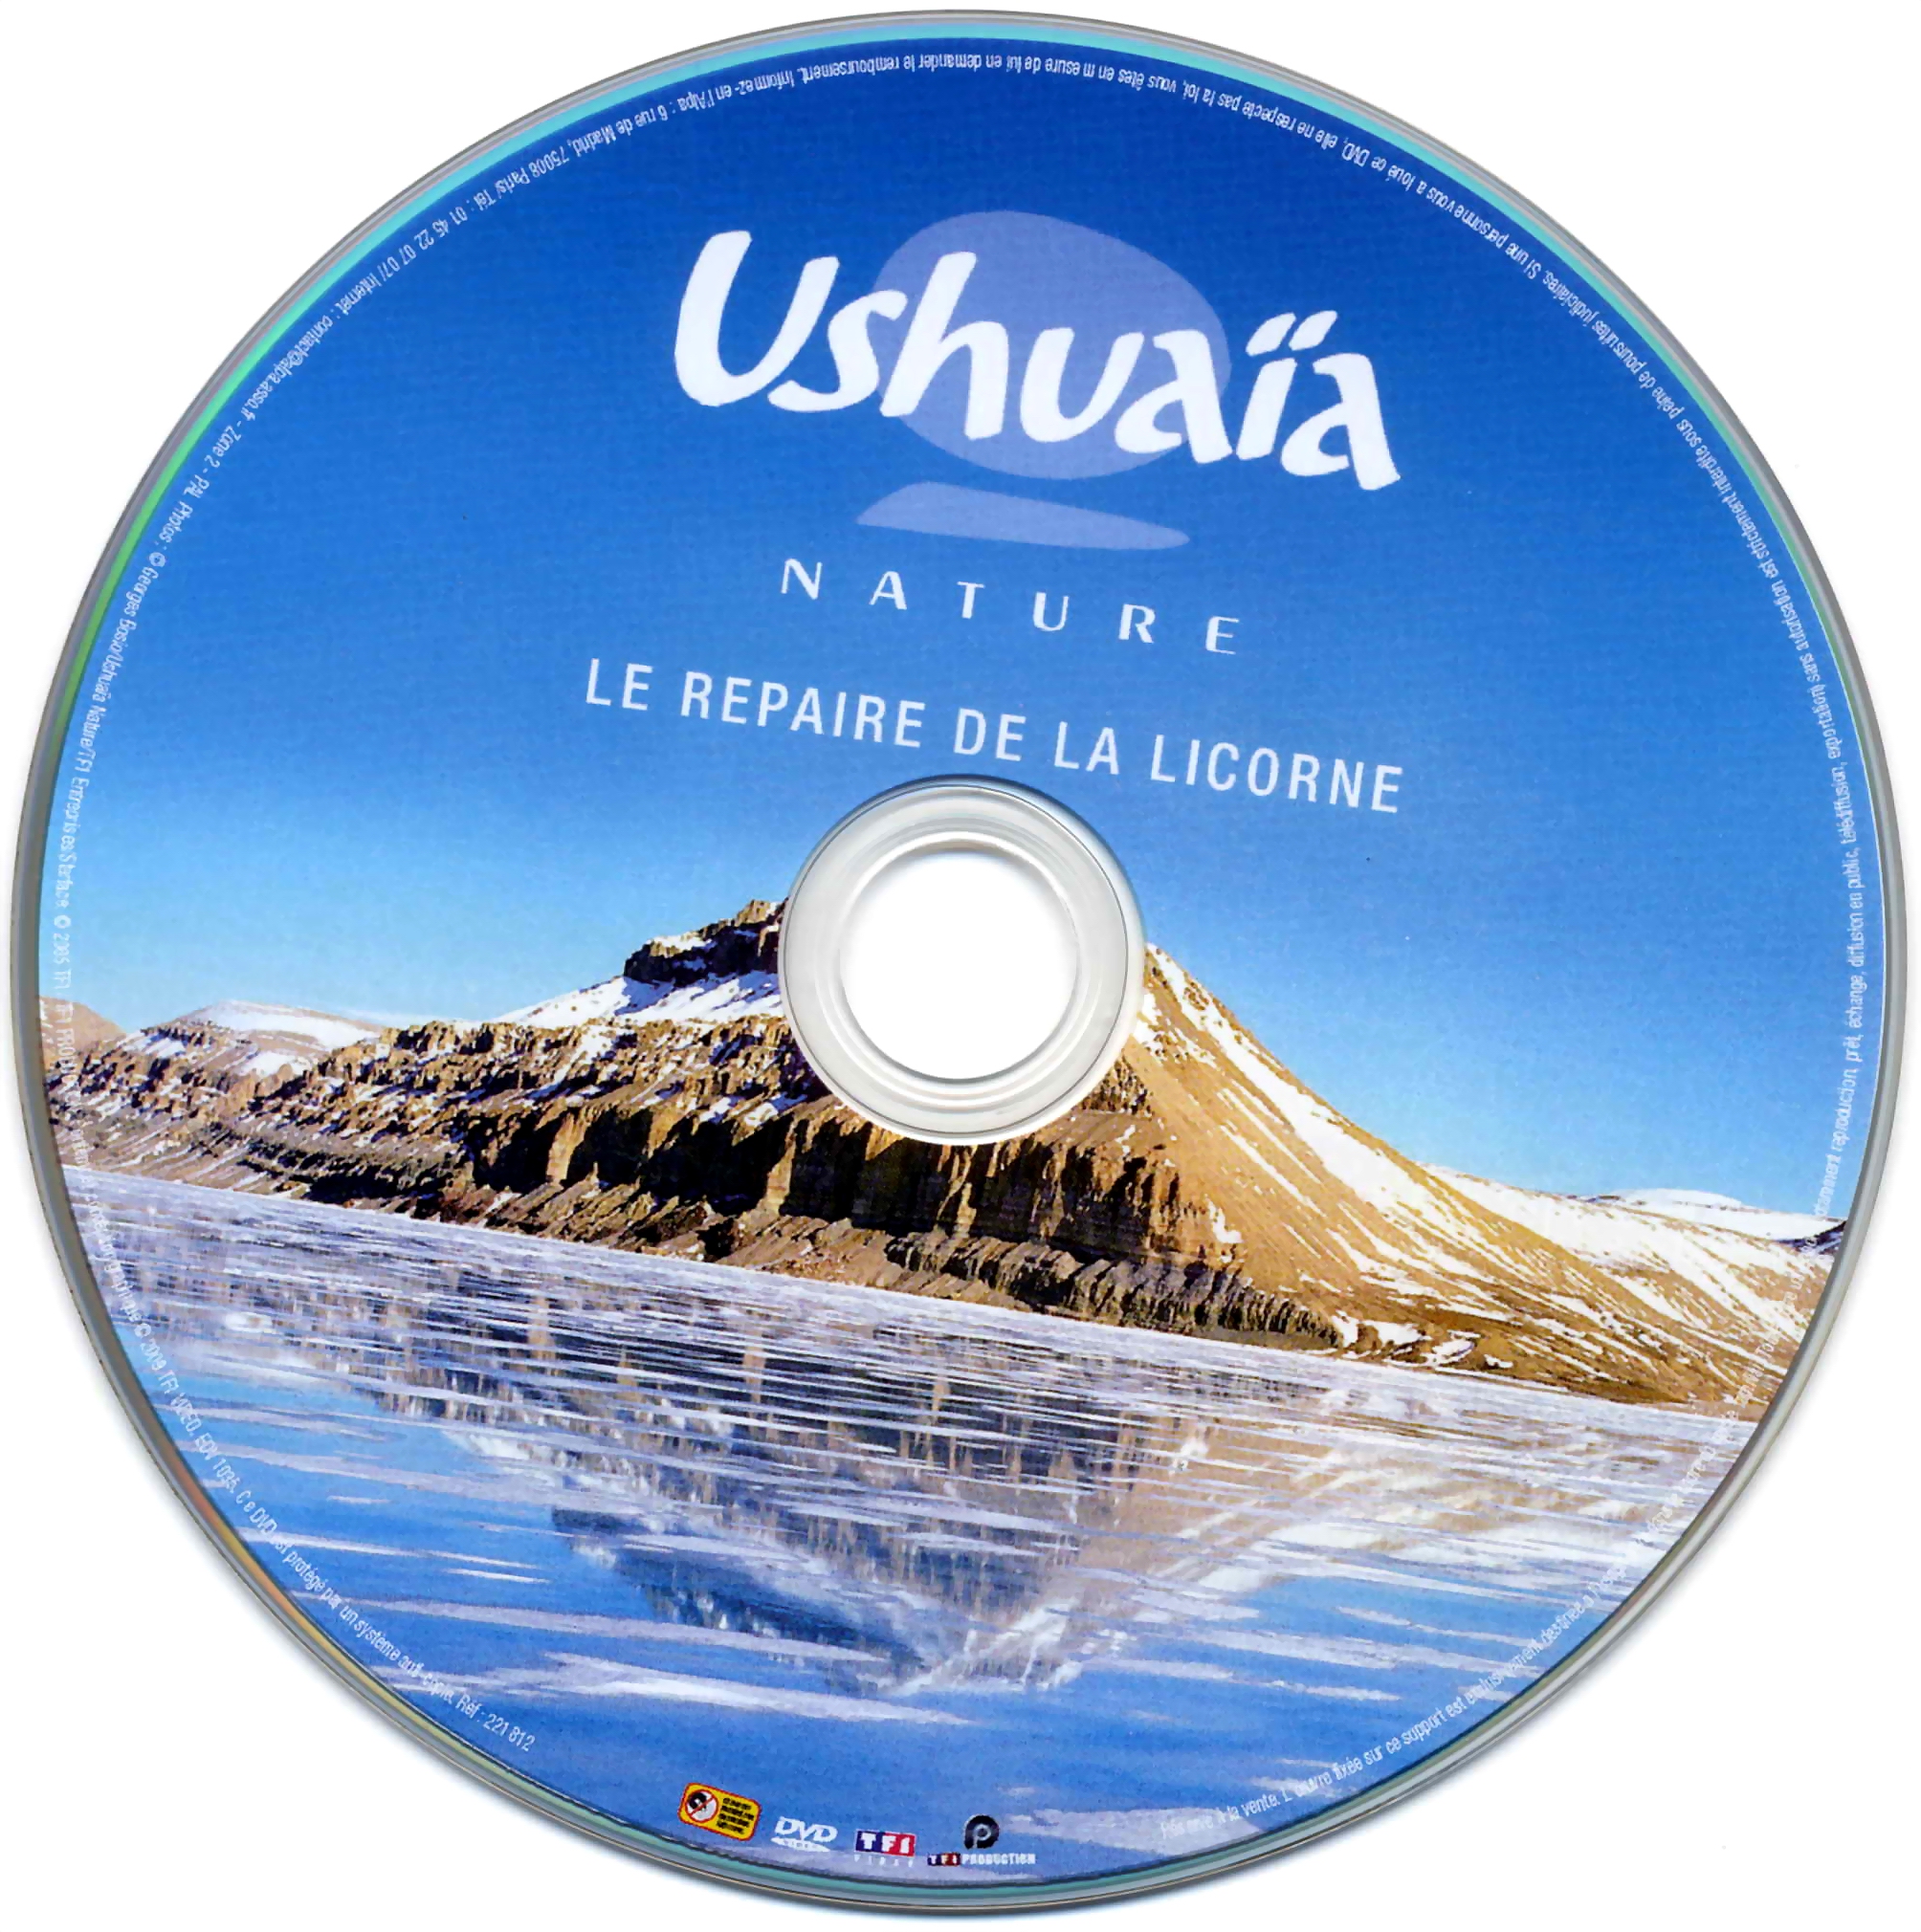 Ushuaia Nature - Le repaire de la Licorne